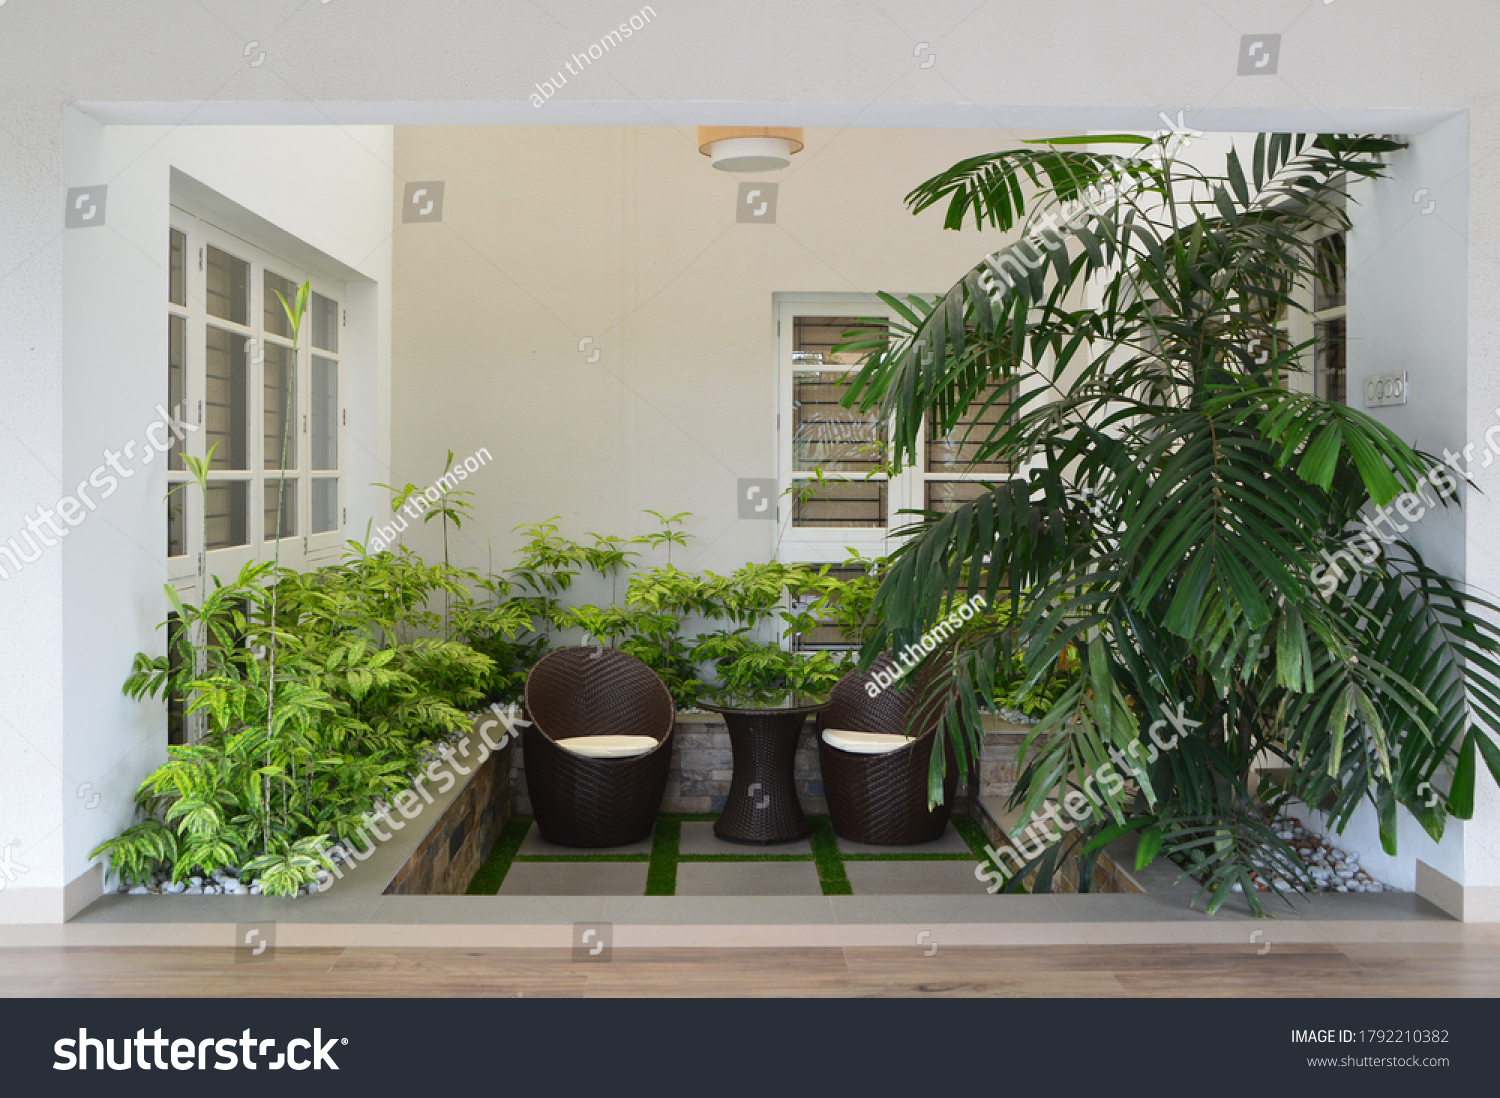 Stock Photo Interior Courtyard In A Kerala House 1792210382 